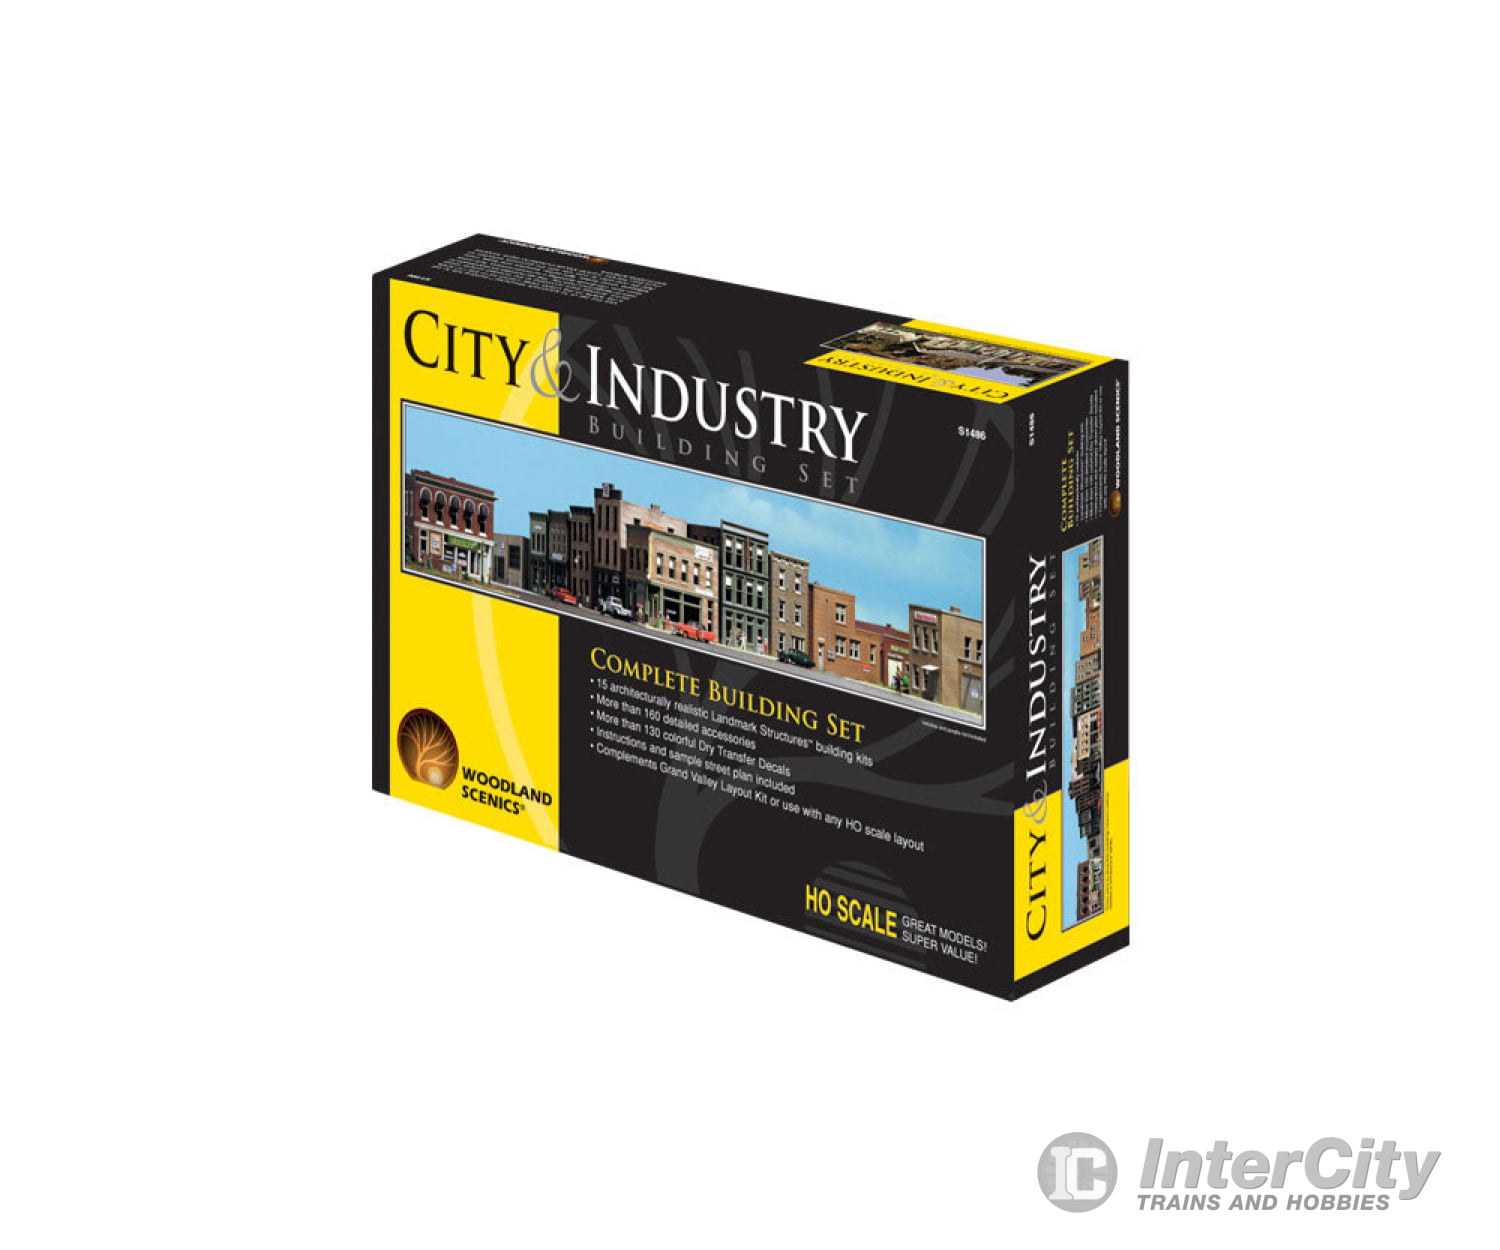 Woodland Scenics 1486 City & Industry Building Set (Ho) Layout Kits